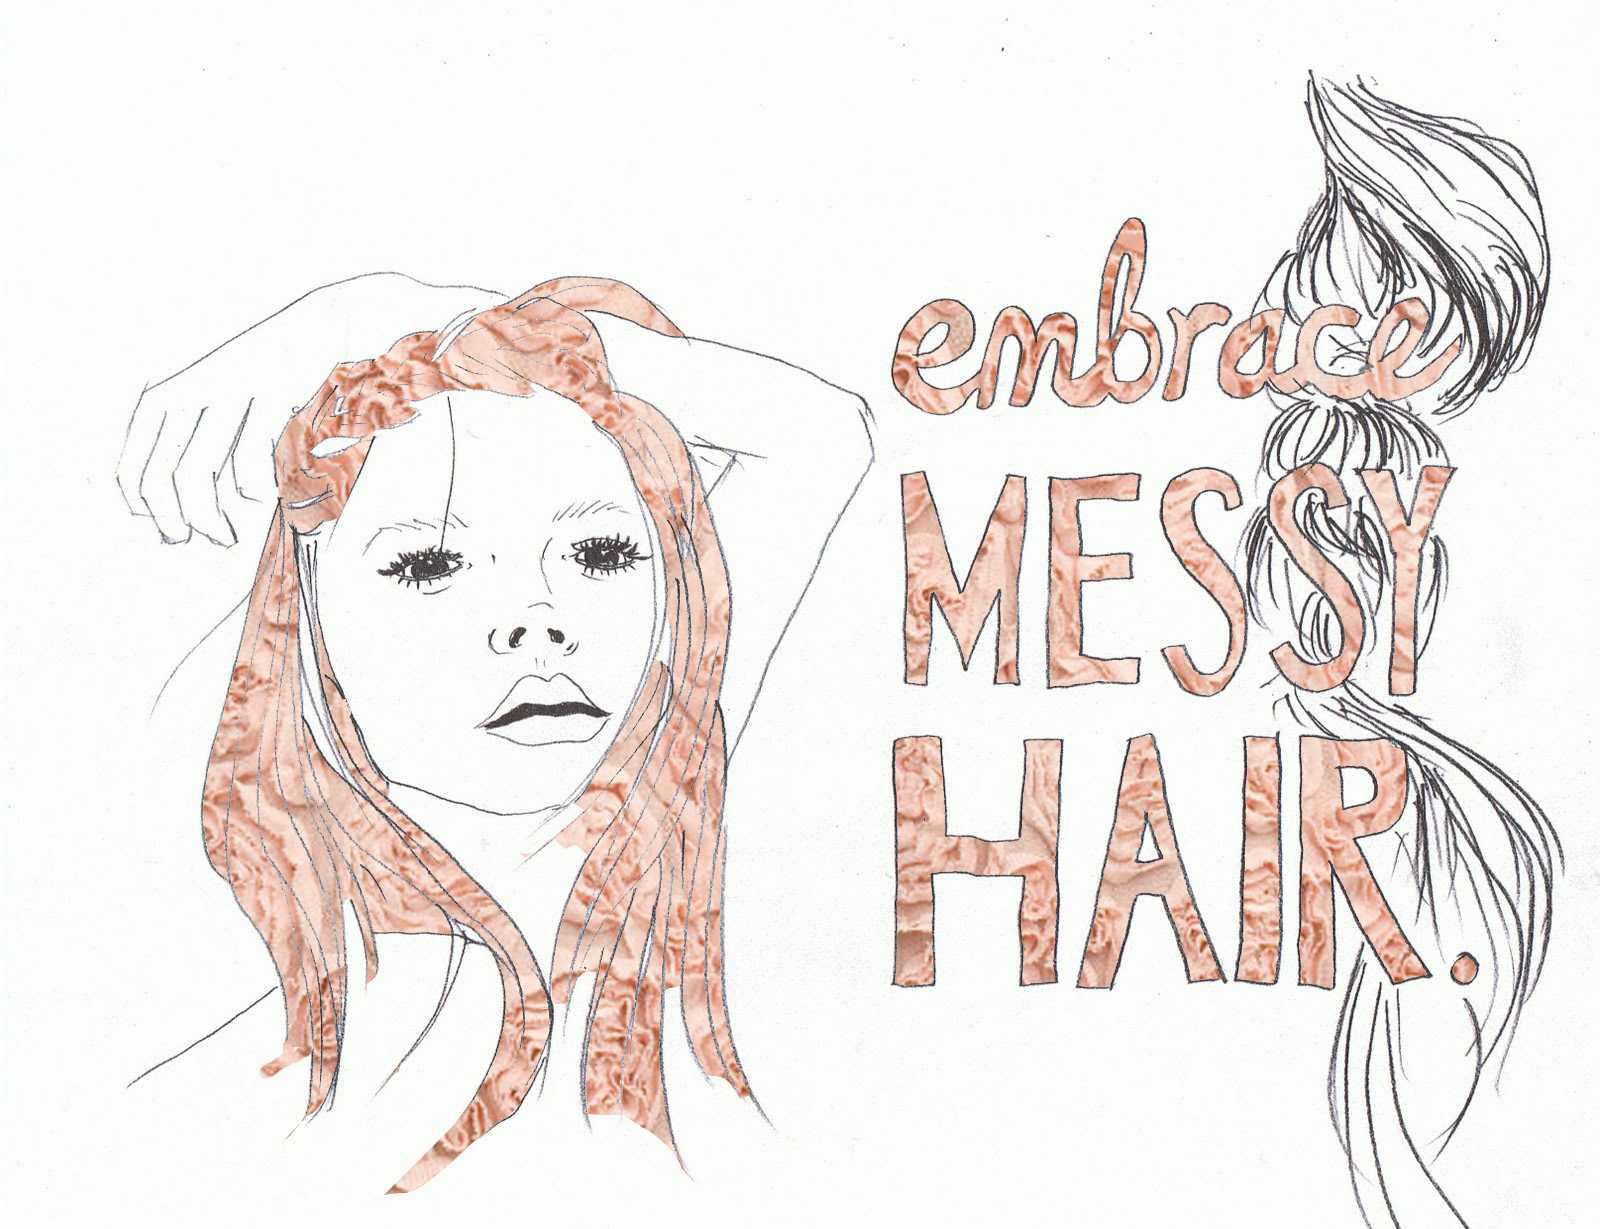 Embrace Messy Hair